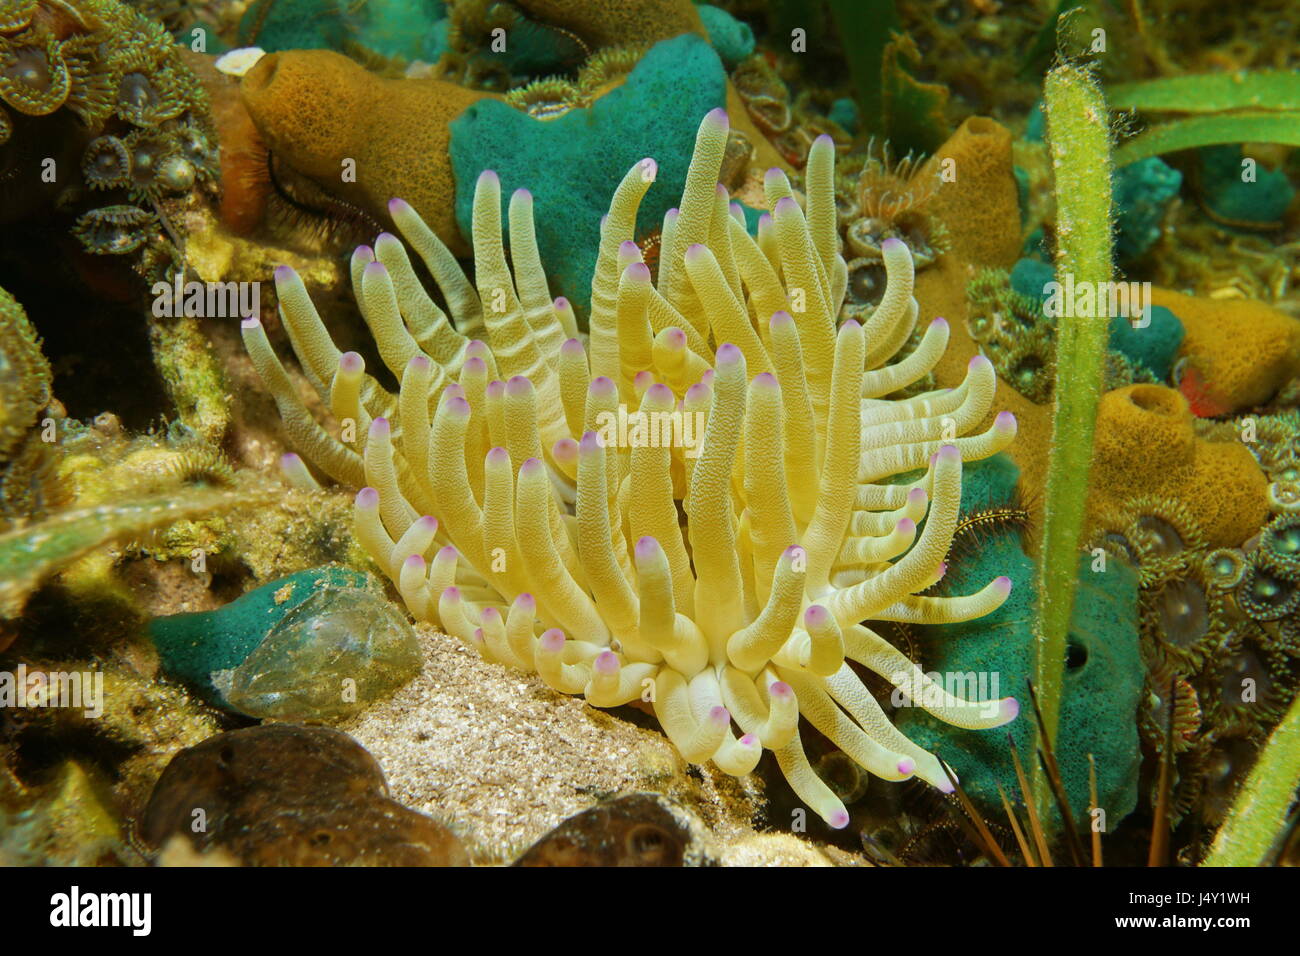 Marine life sea anemone Condylactis gigantea underwater in the Caribbean sea Stock Photo